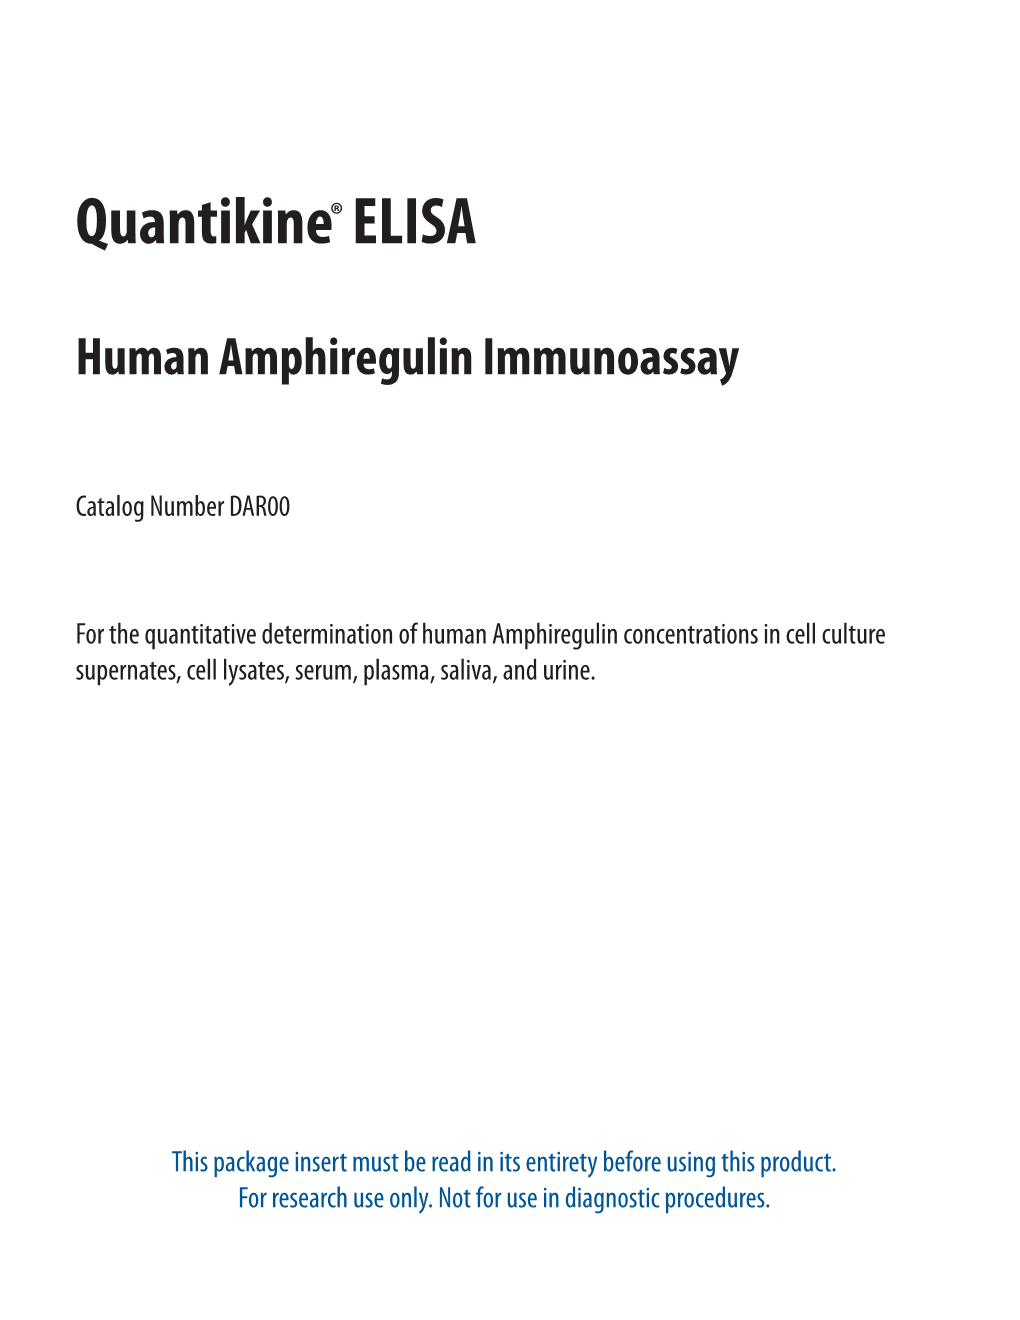 Human Amphiregulin Quantikine ELISA